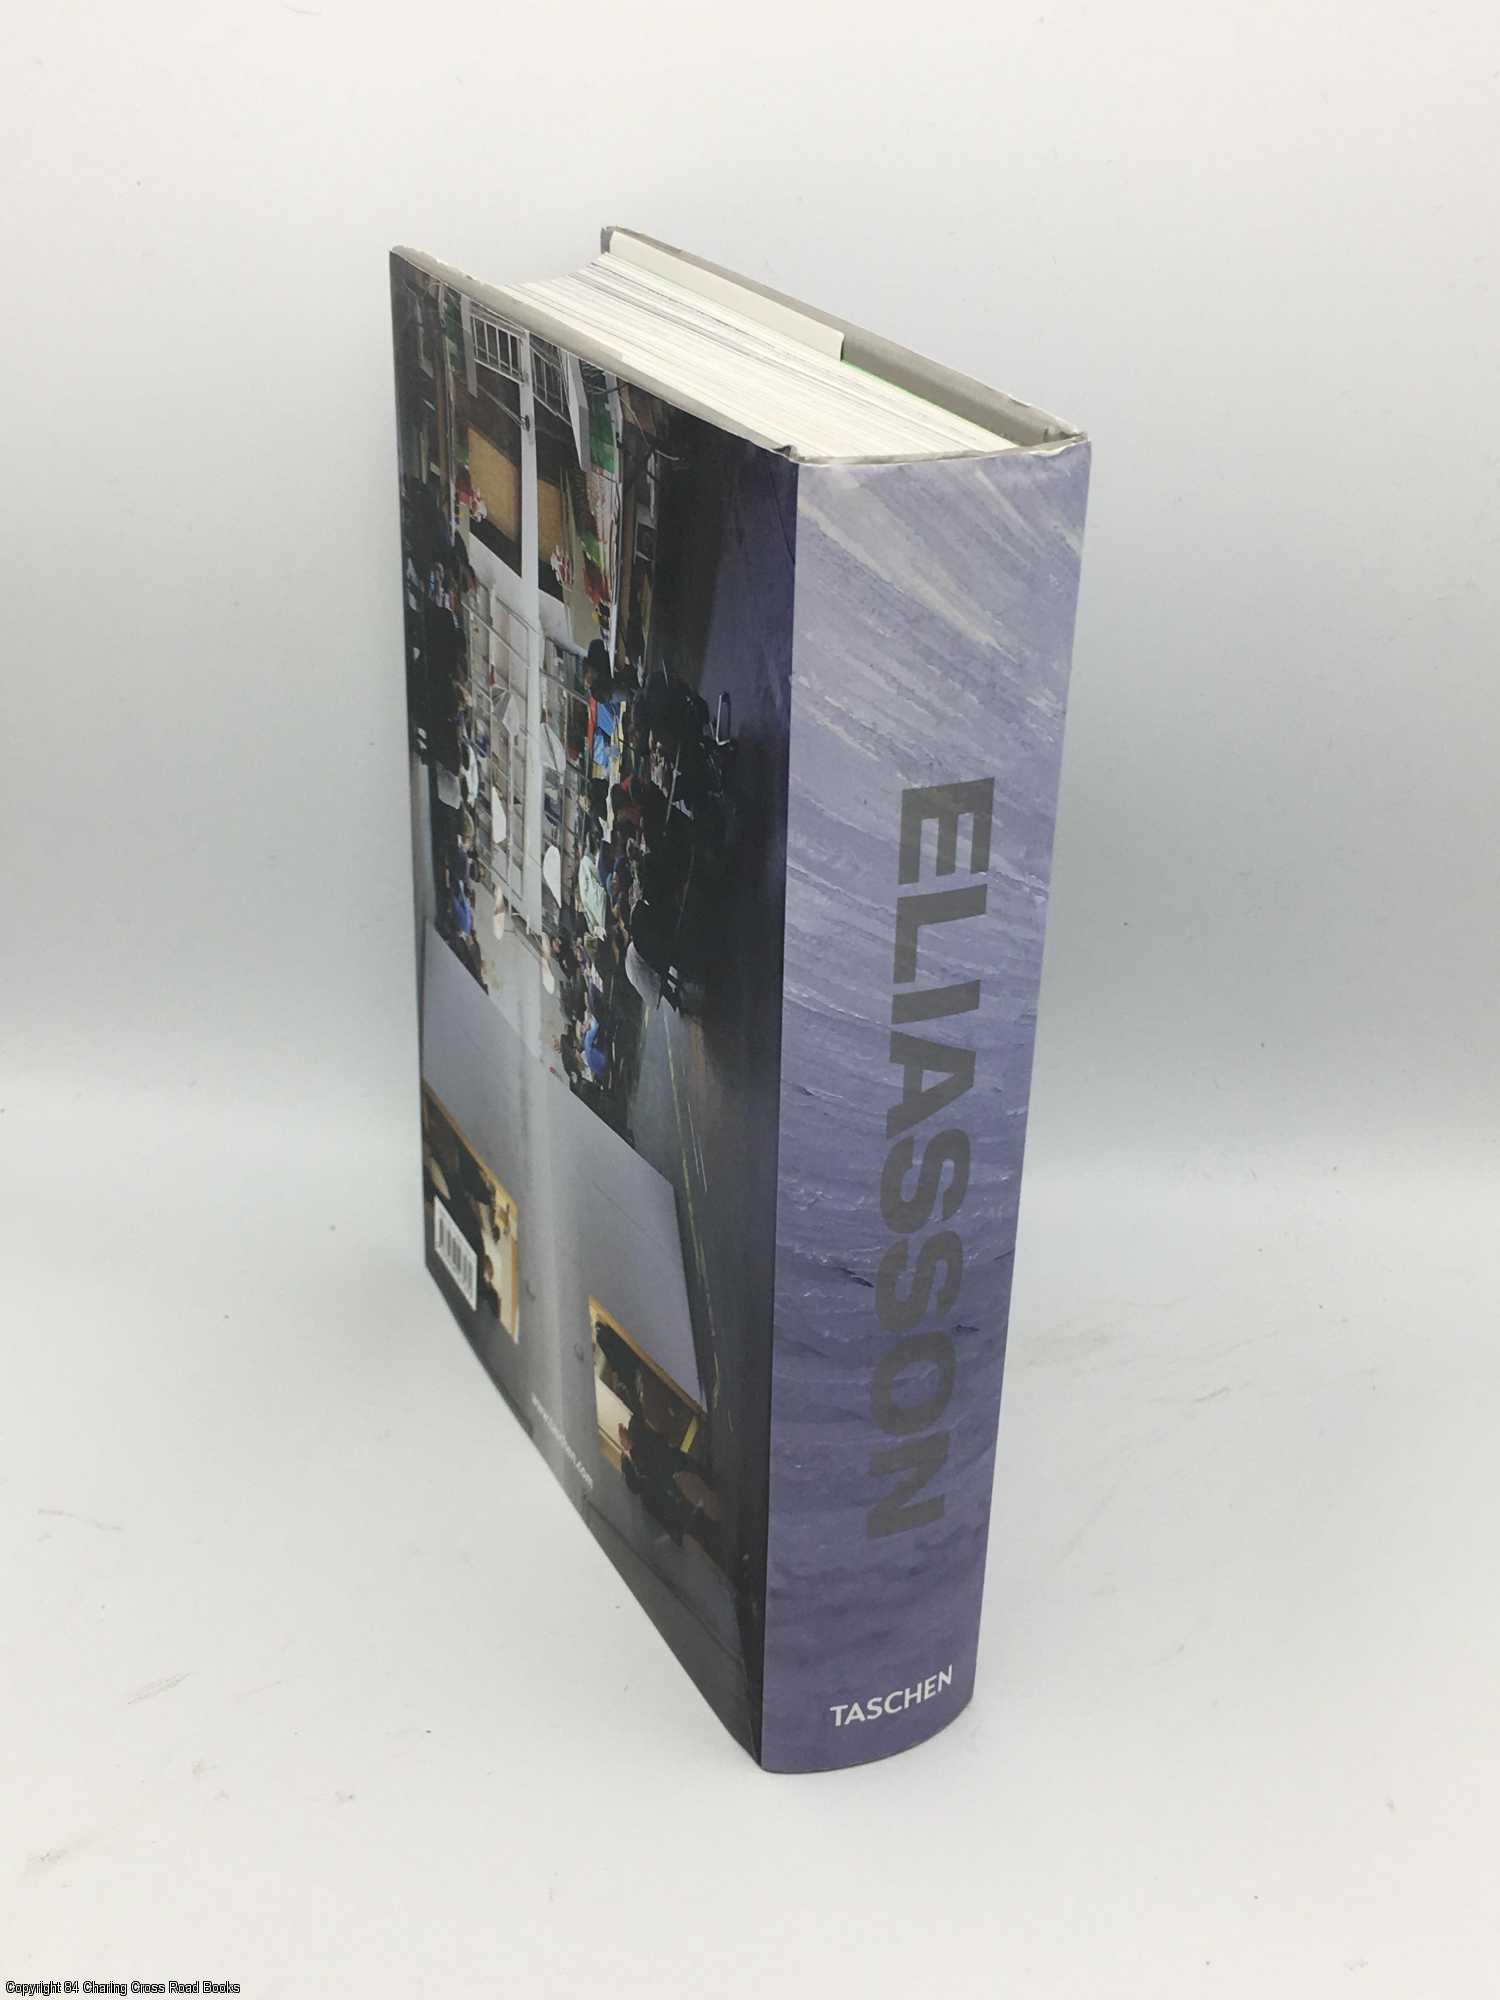 Studio Olafur Eliasson: An Encyclopedia by Olafur Eliasson on 84 Charing  Cross Rare Books